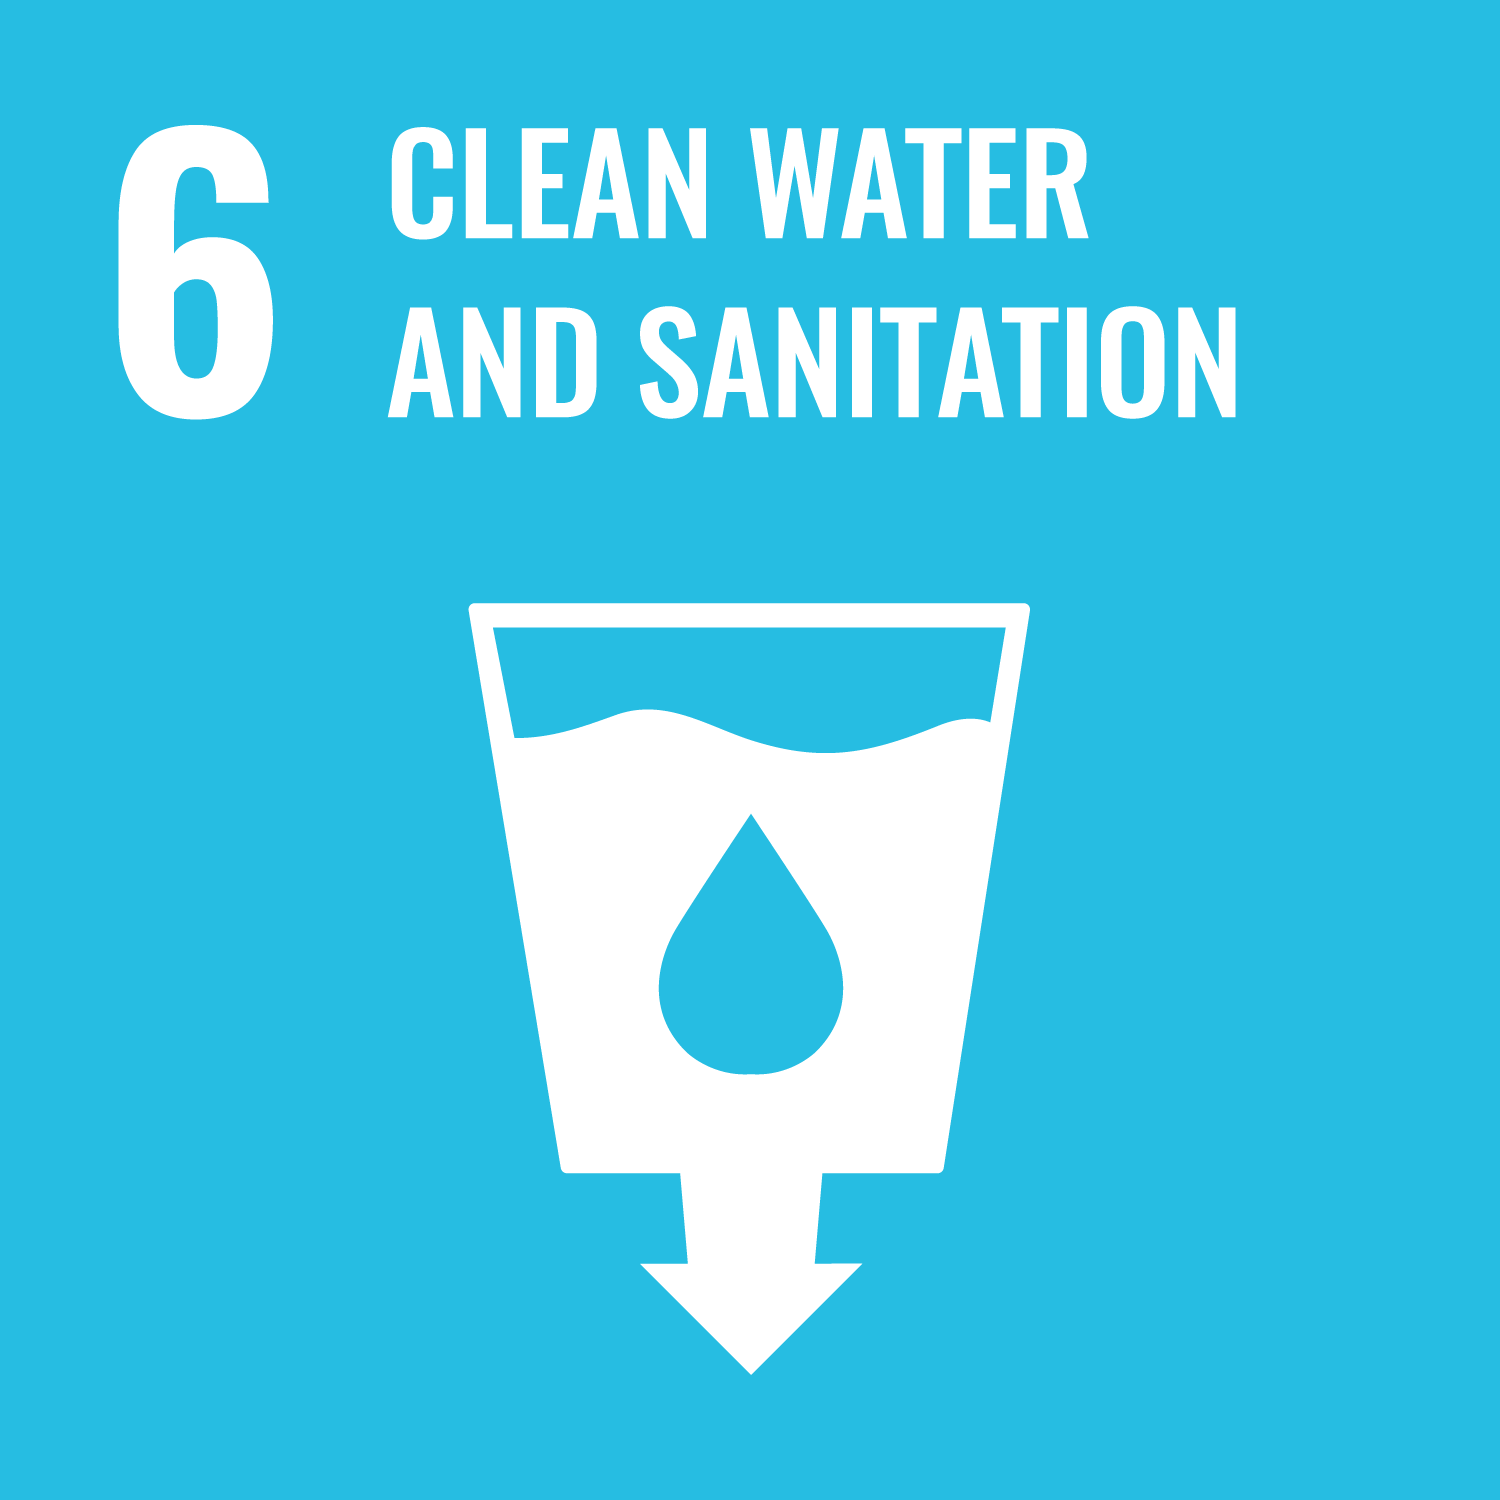 UN SDG goal 6: Clean water and sanitation